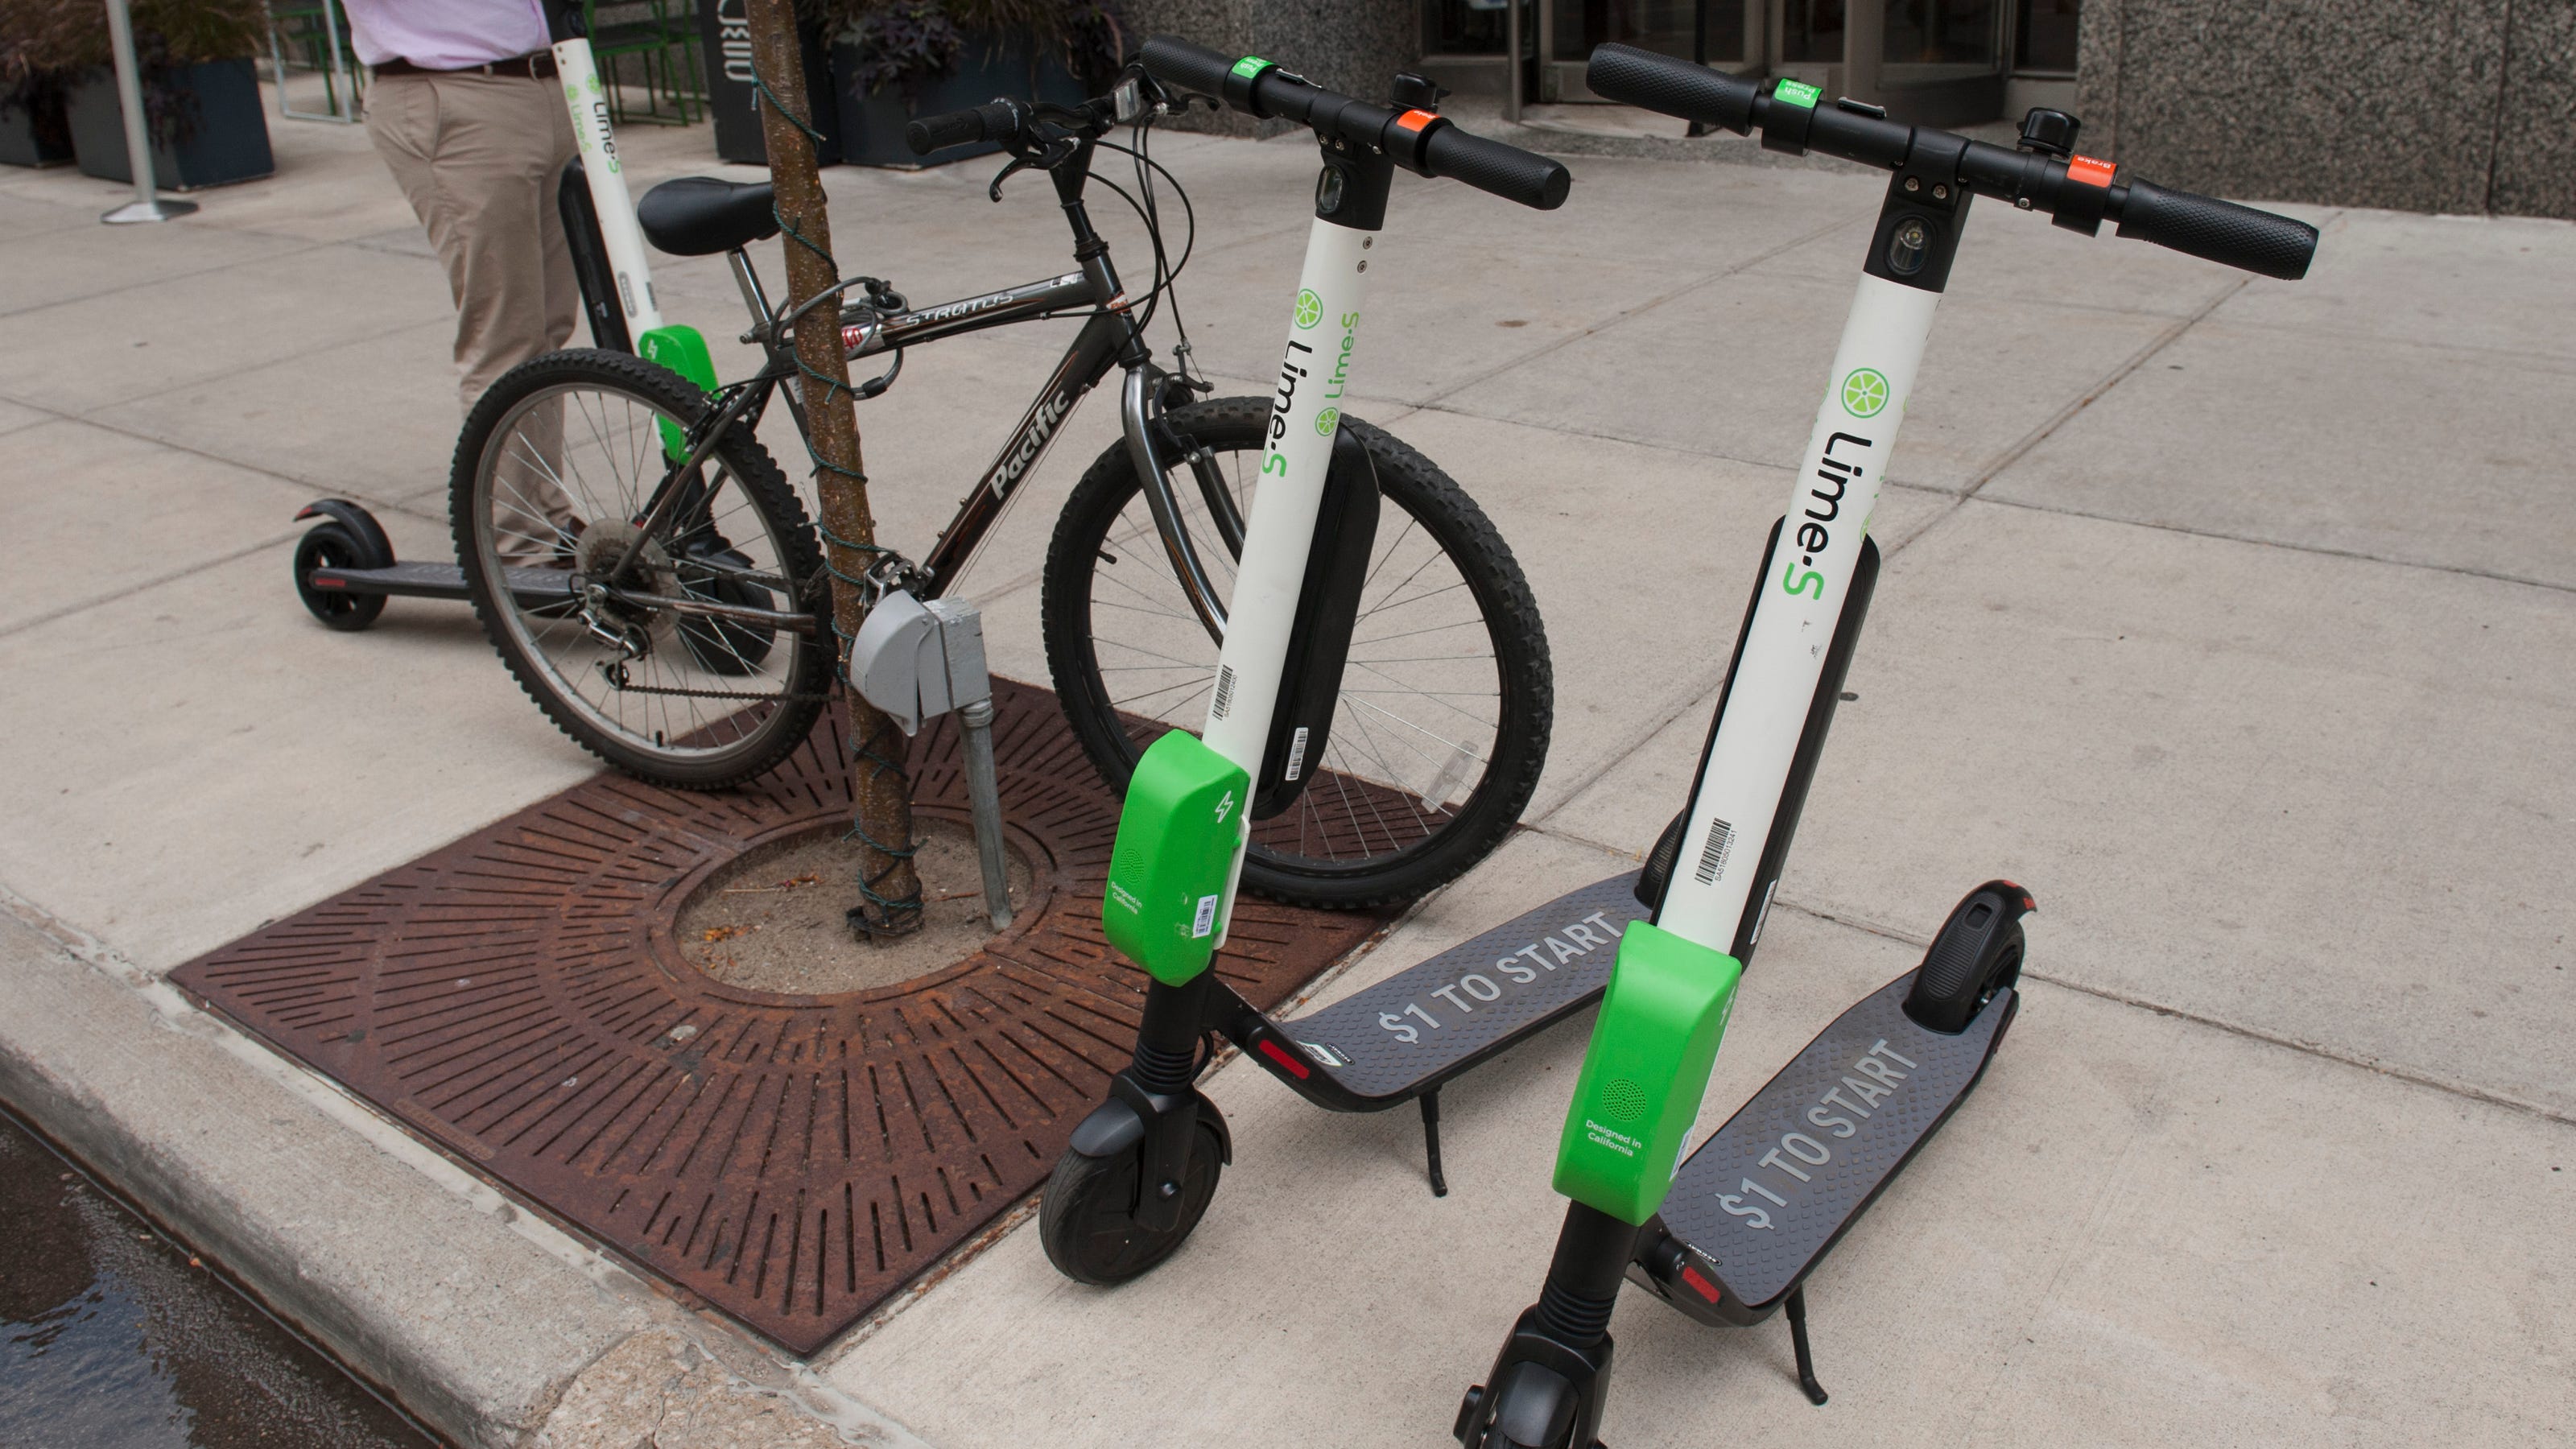 salgsplan synge Senator Lime scooters return to downtown Detroit, Bird ups prices